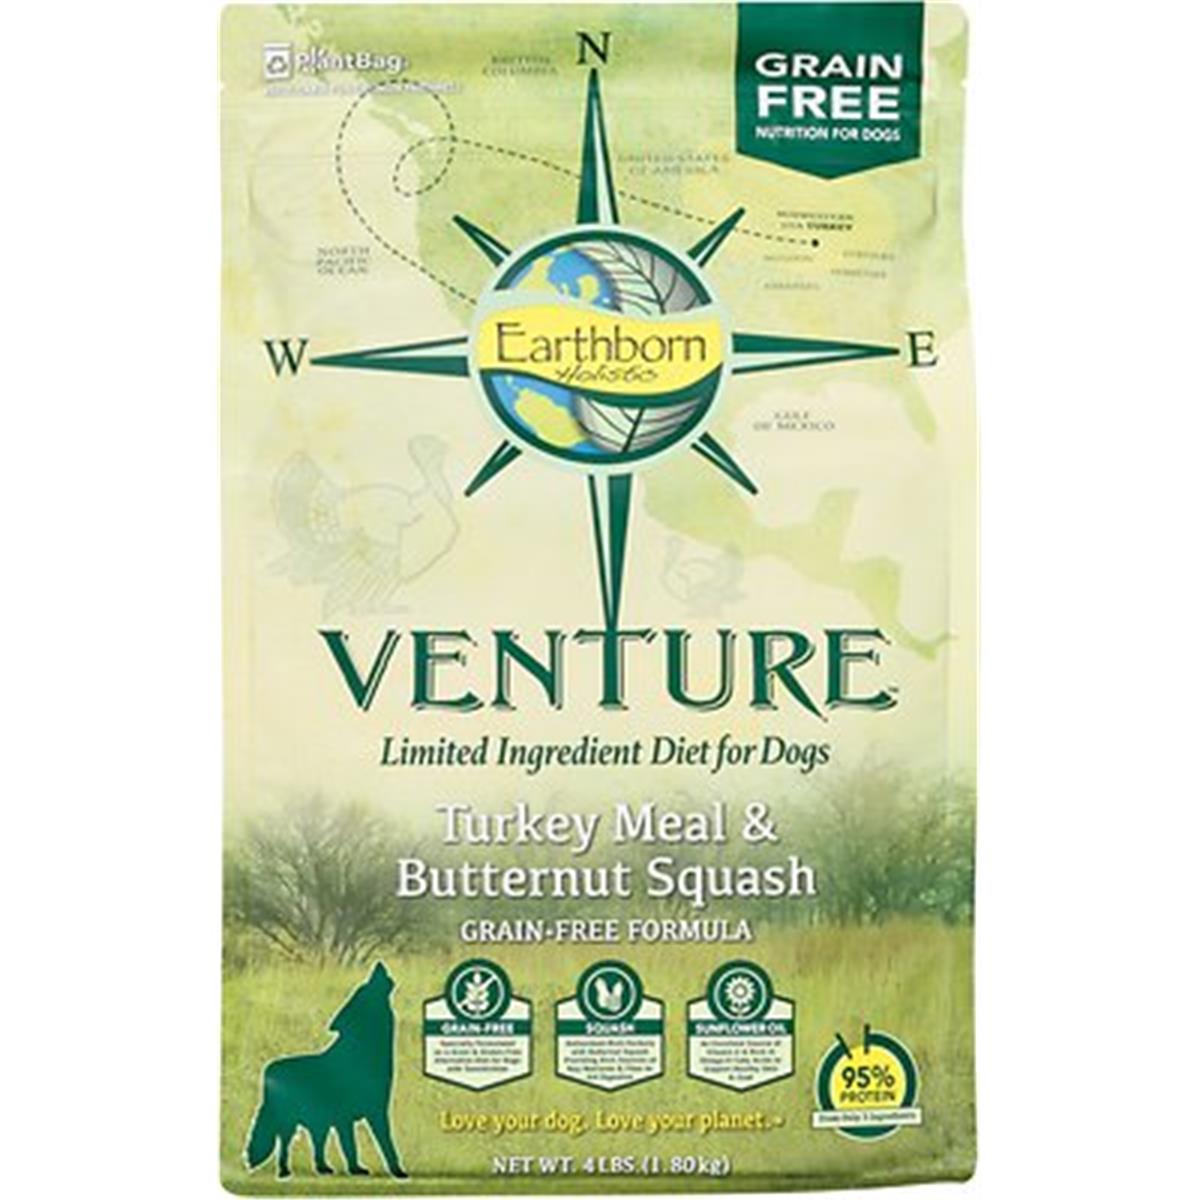 Pf57032 Venture Turkey Meal & Butternut Squash Grain-free Dry Dog Food - 4 Lbs